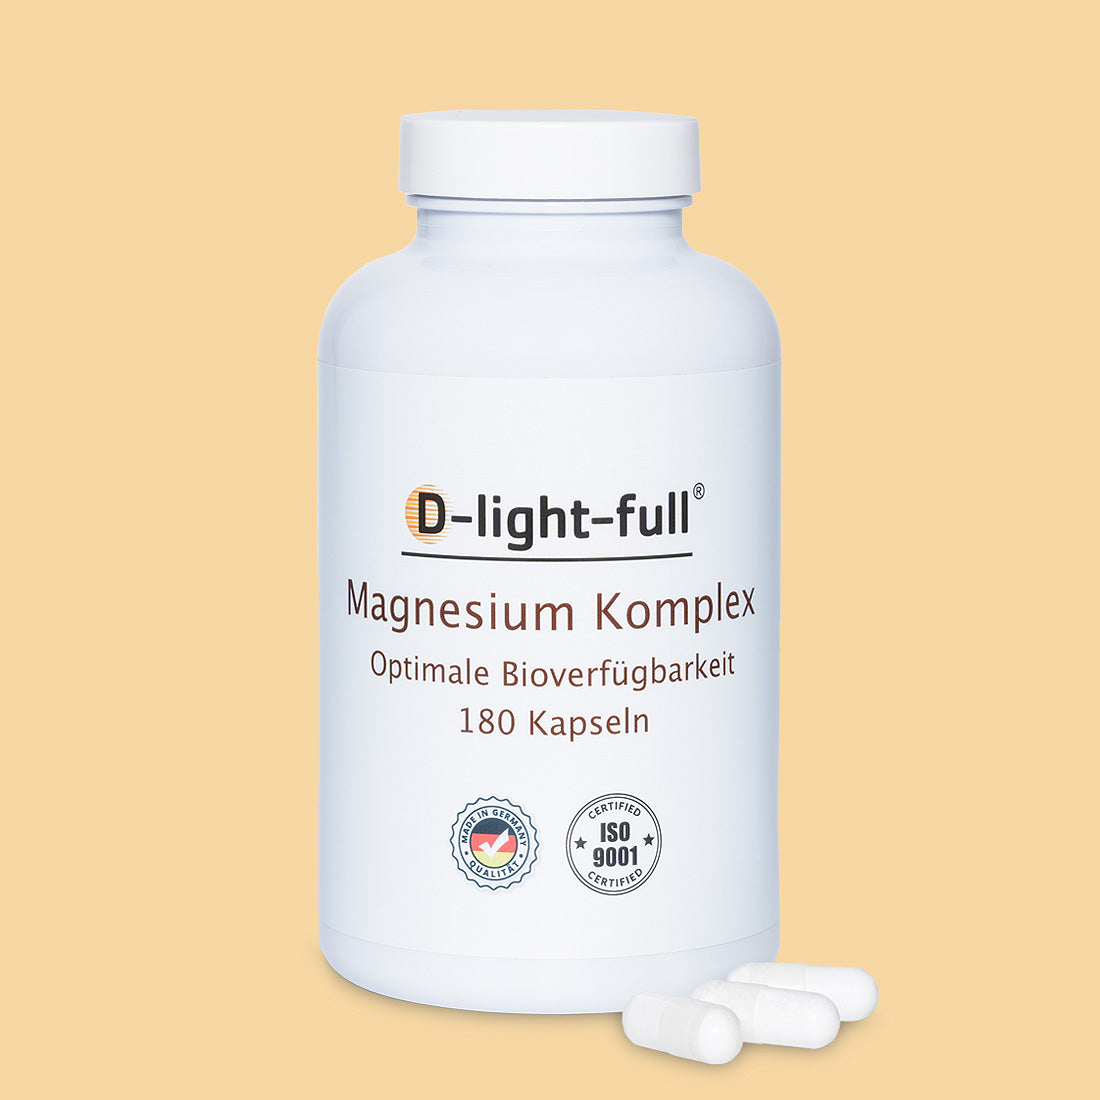 D-light-full Magnesium komplex (180 Kapseln vegan)